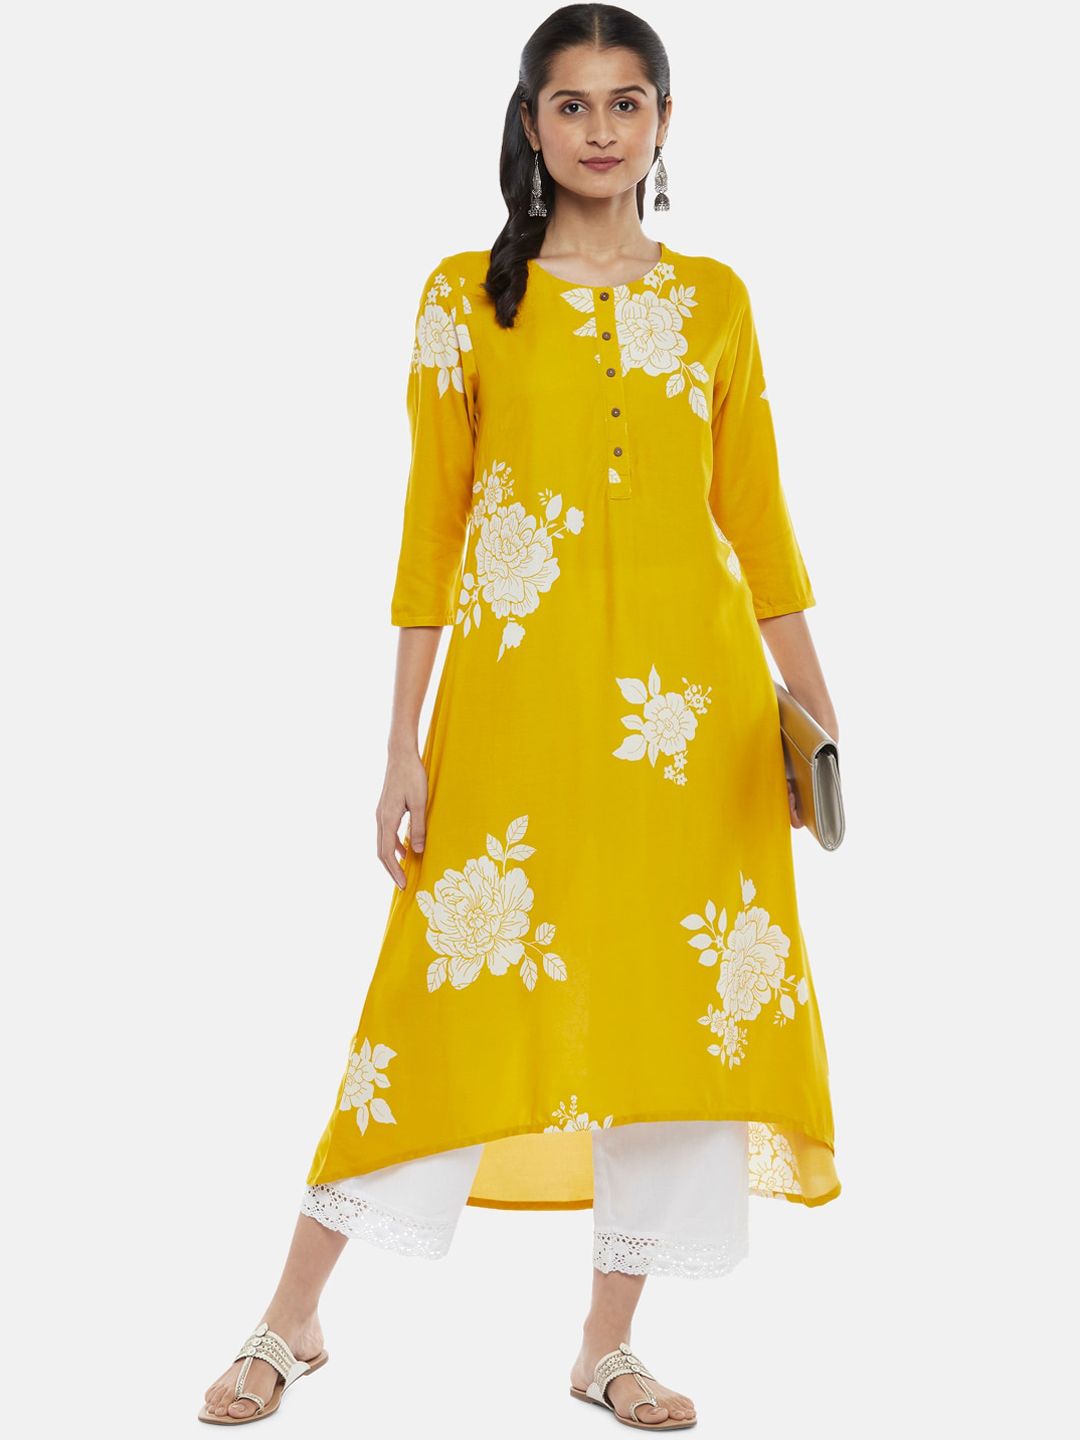 RANGMANCH BY PANTALOONS Women Yellow Floral Printed Kurta Price in India